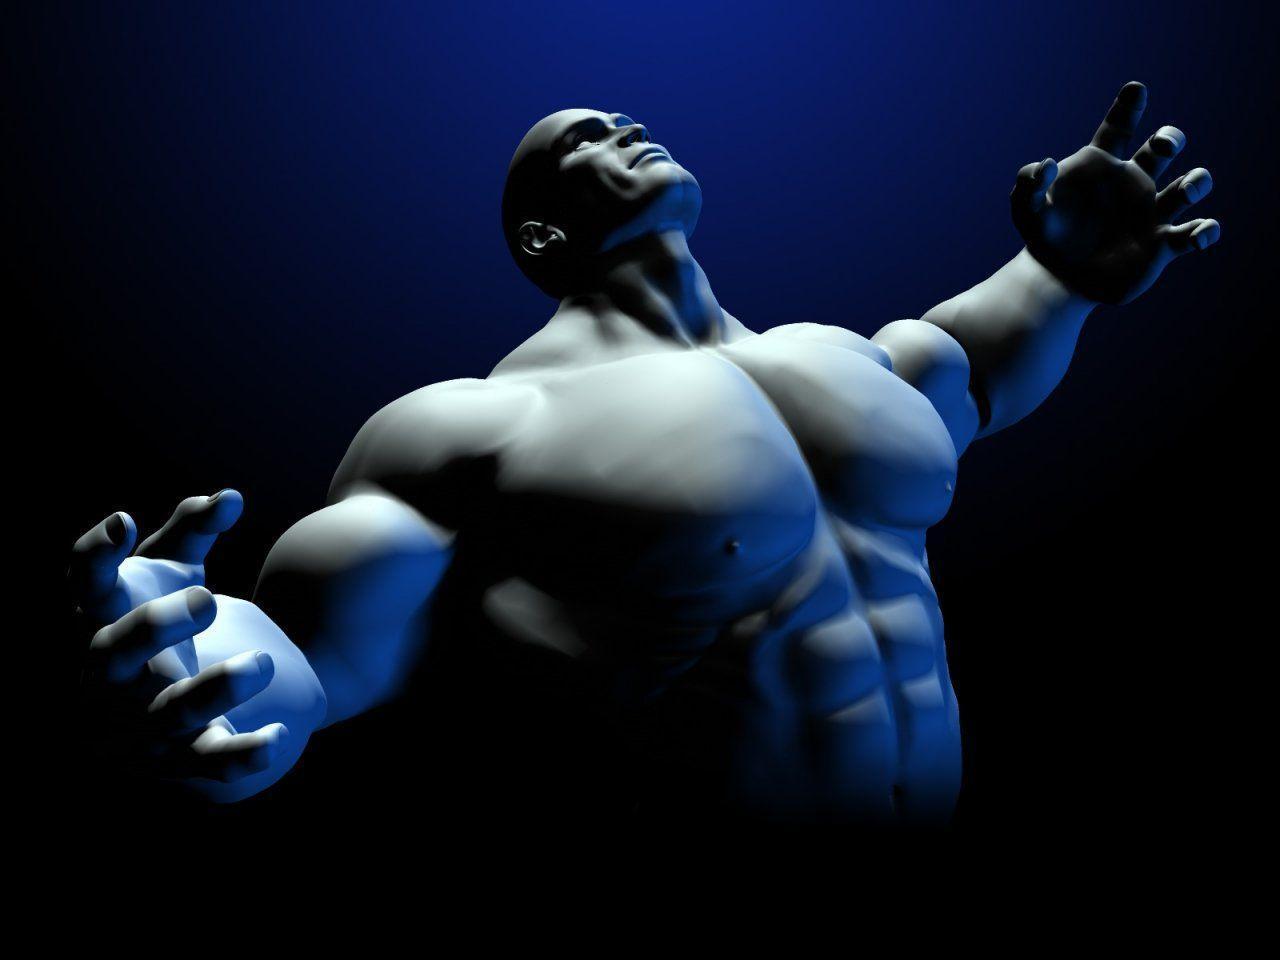 Muscle Man Wallpaper Download. Digital art Wallpaper Gallery